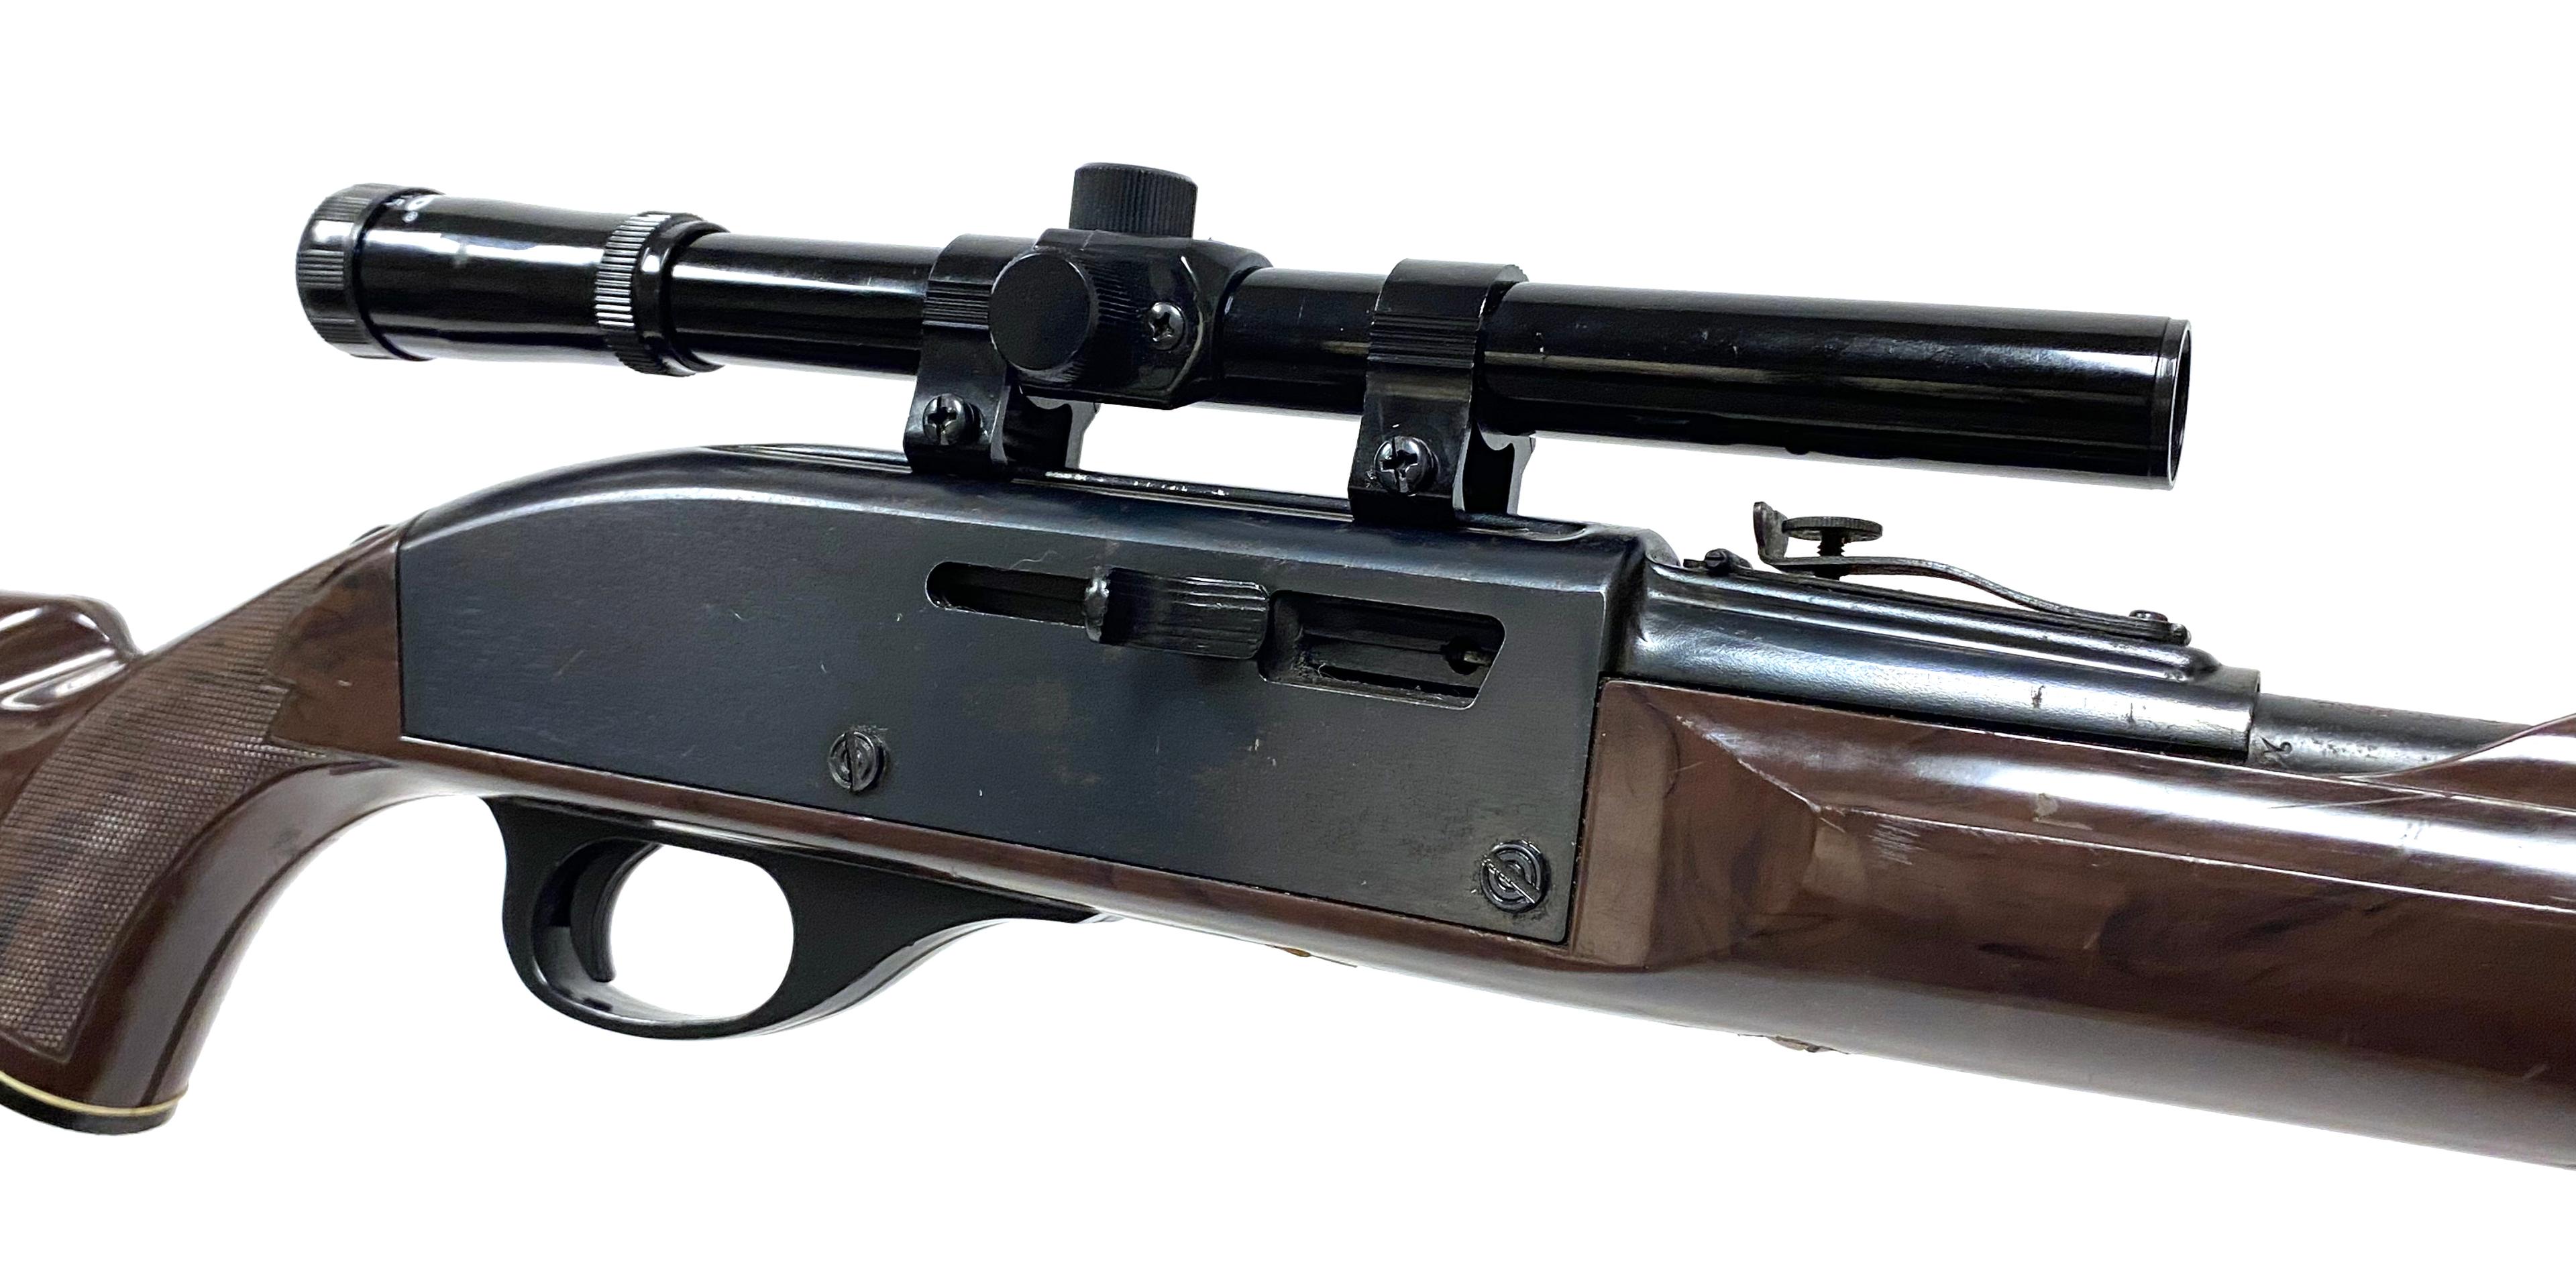 Remington Nylon 66 .22 LR Semi-Automatic Rifle with Scope